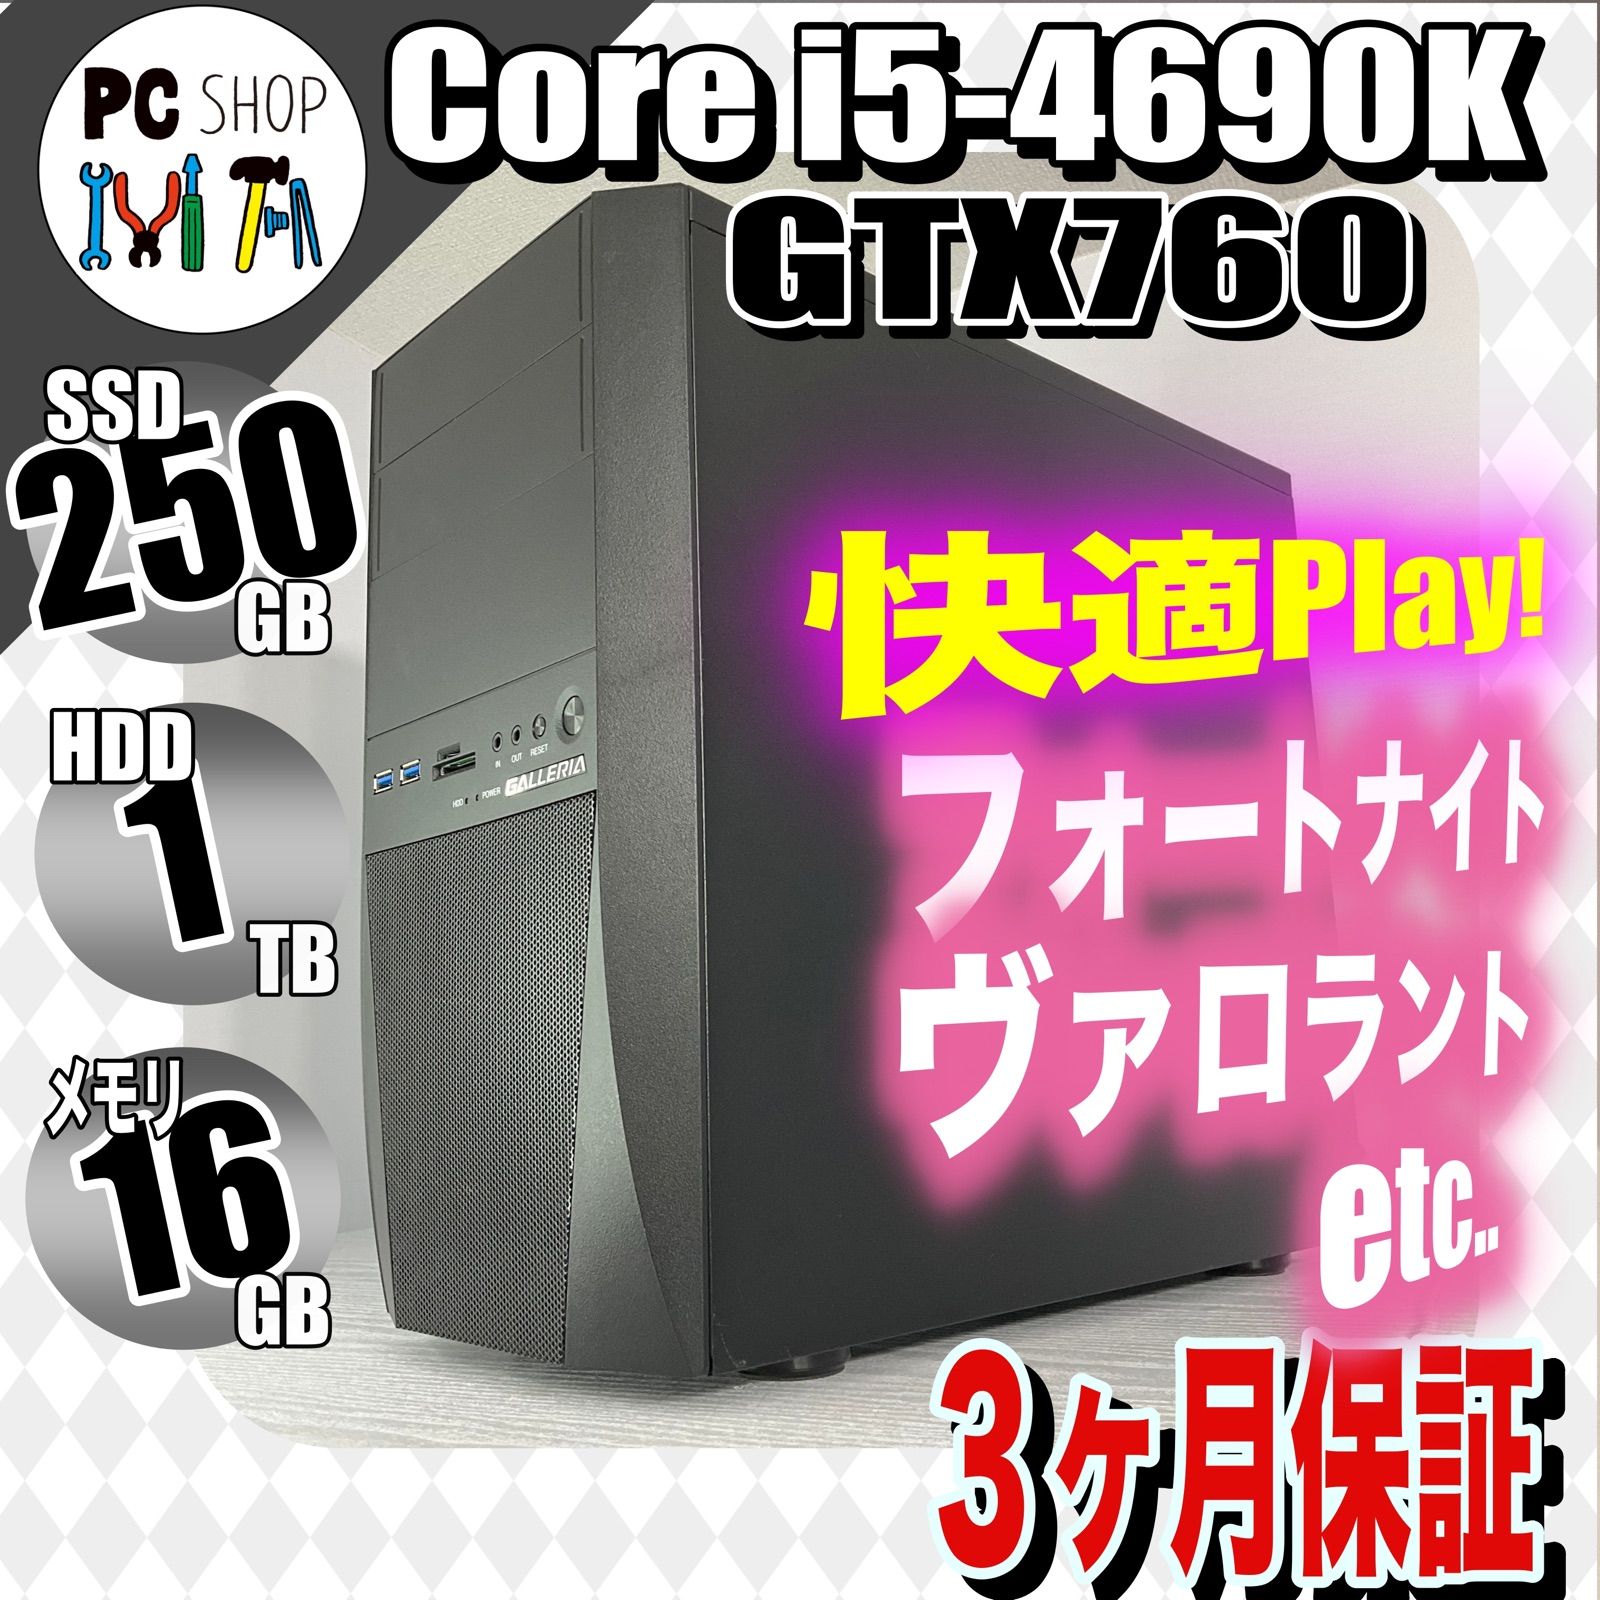 MA-010081]ゲーミングＰＣ Core i5-4690K GTX760 SSD メモリ16GB